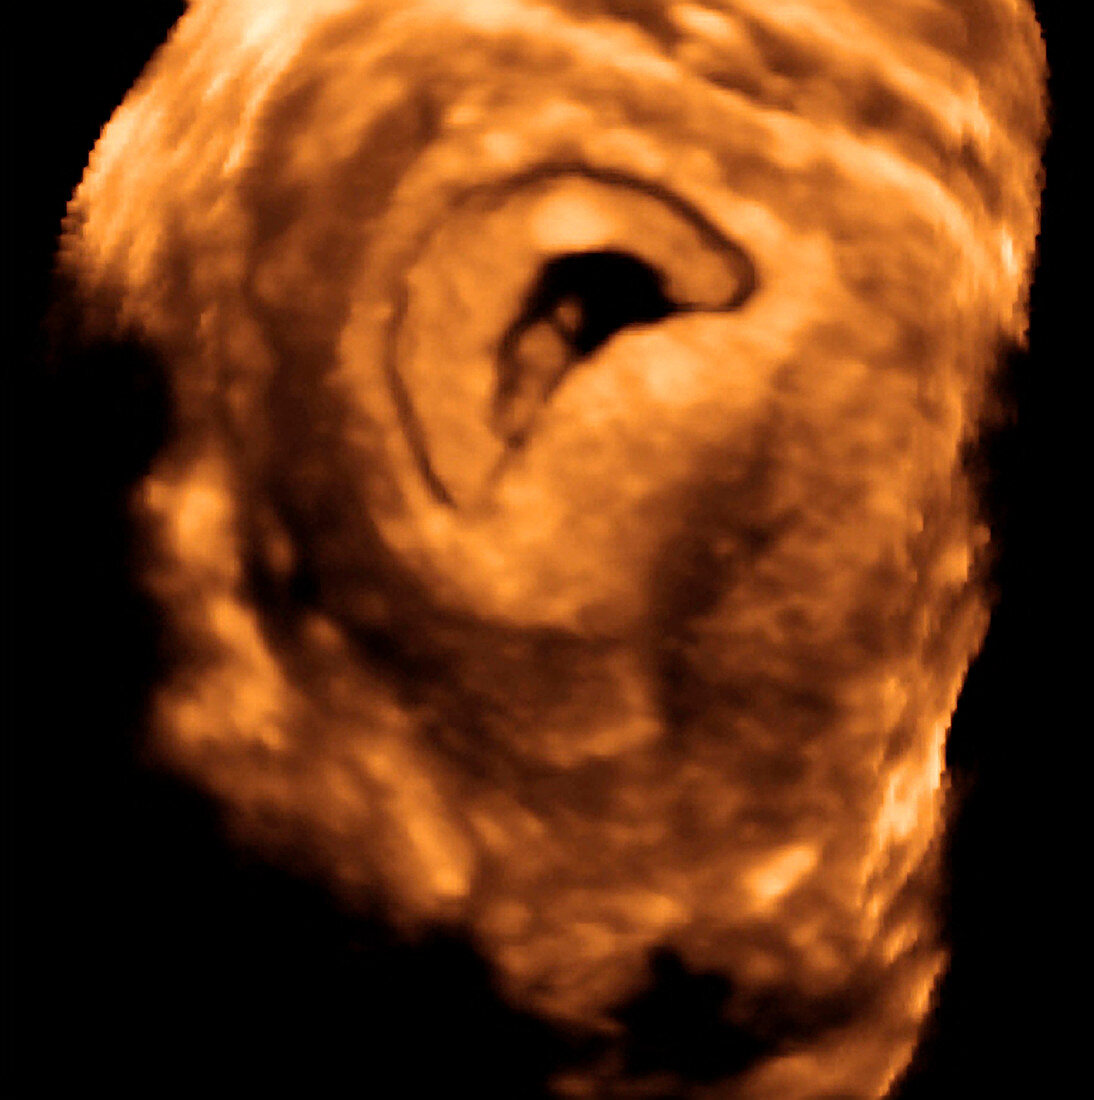 Embryo,3-D ultrasound scan